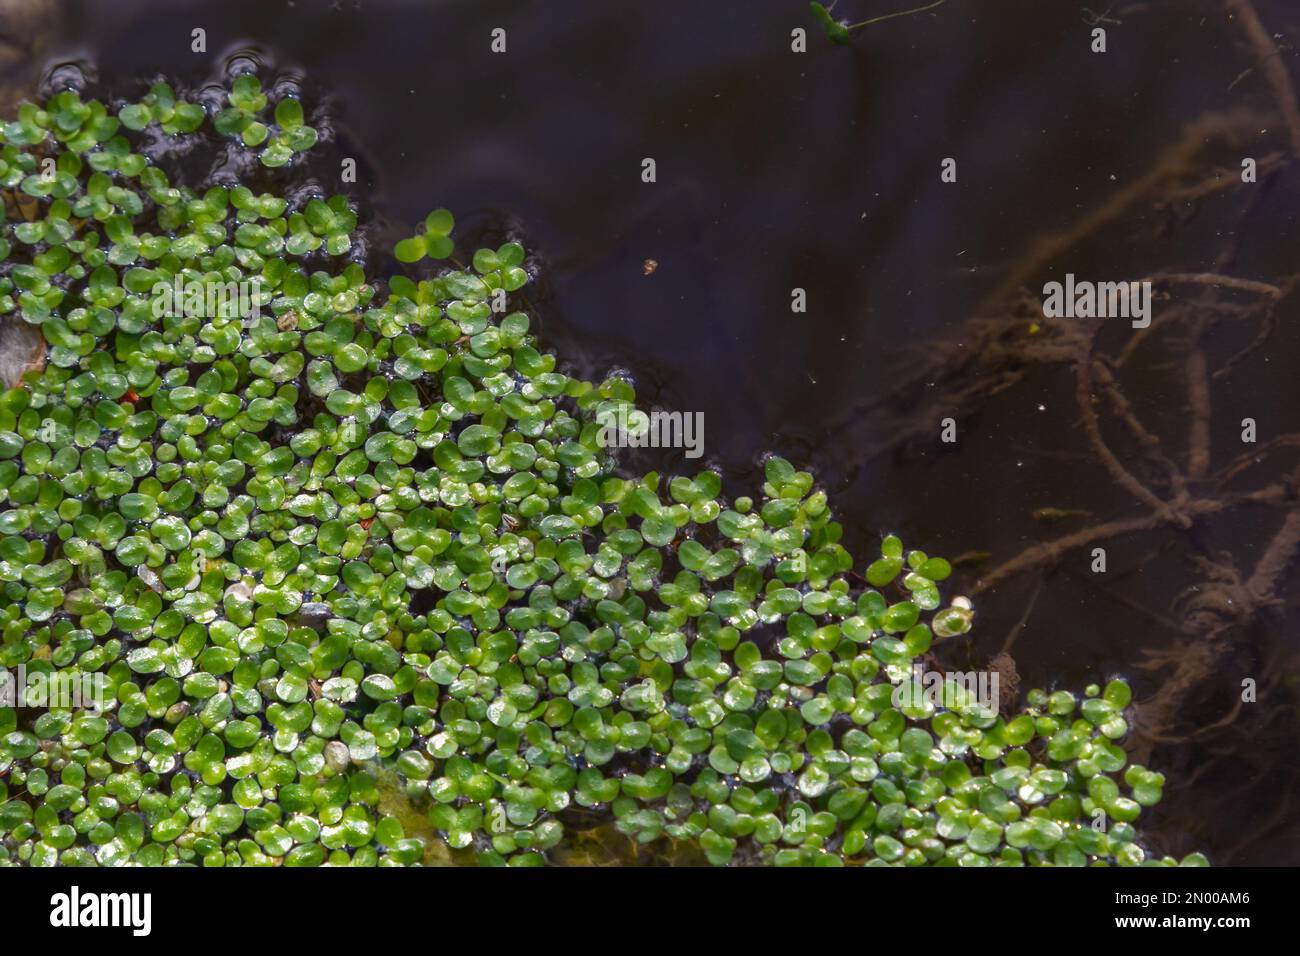 Duckweed. Green Duckweed natural background on water. Stock Photo